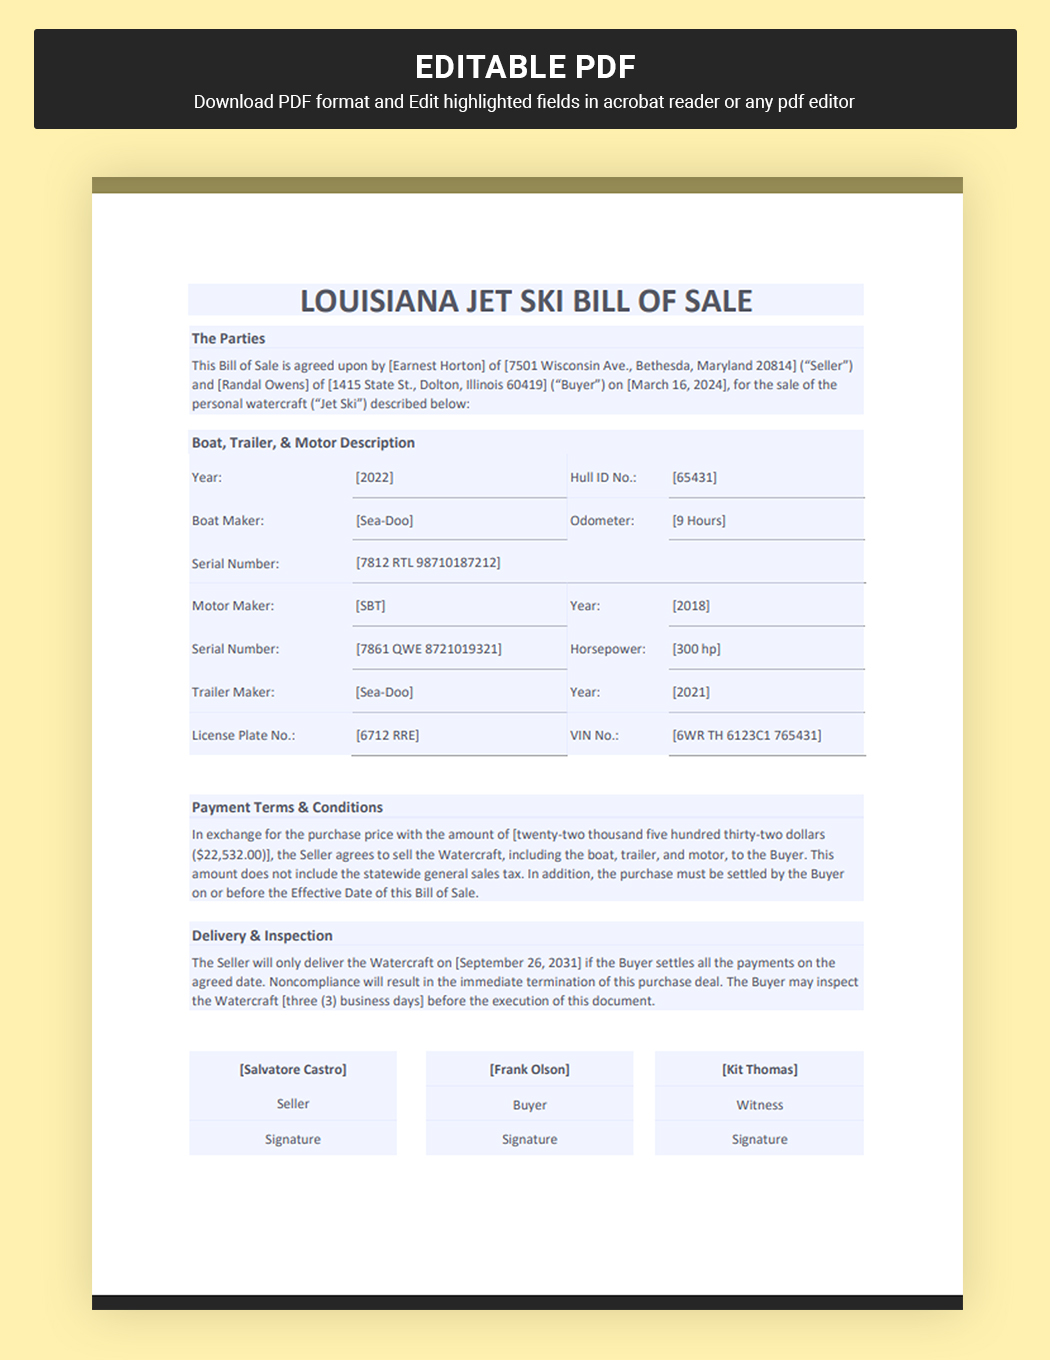 Louisiana Jet Ski Bill Of Sale Template Download in Word, Google Docs